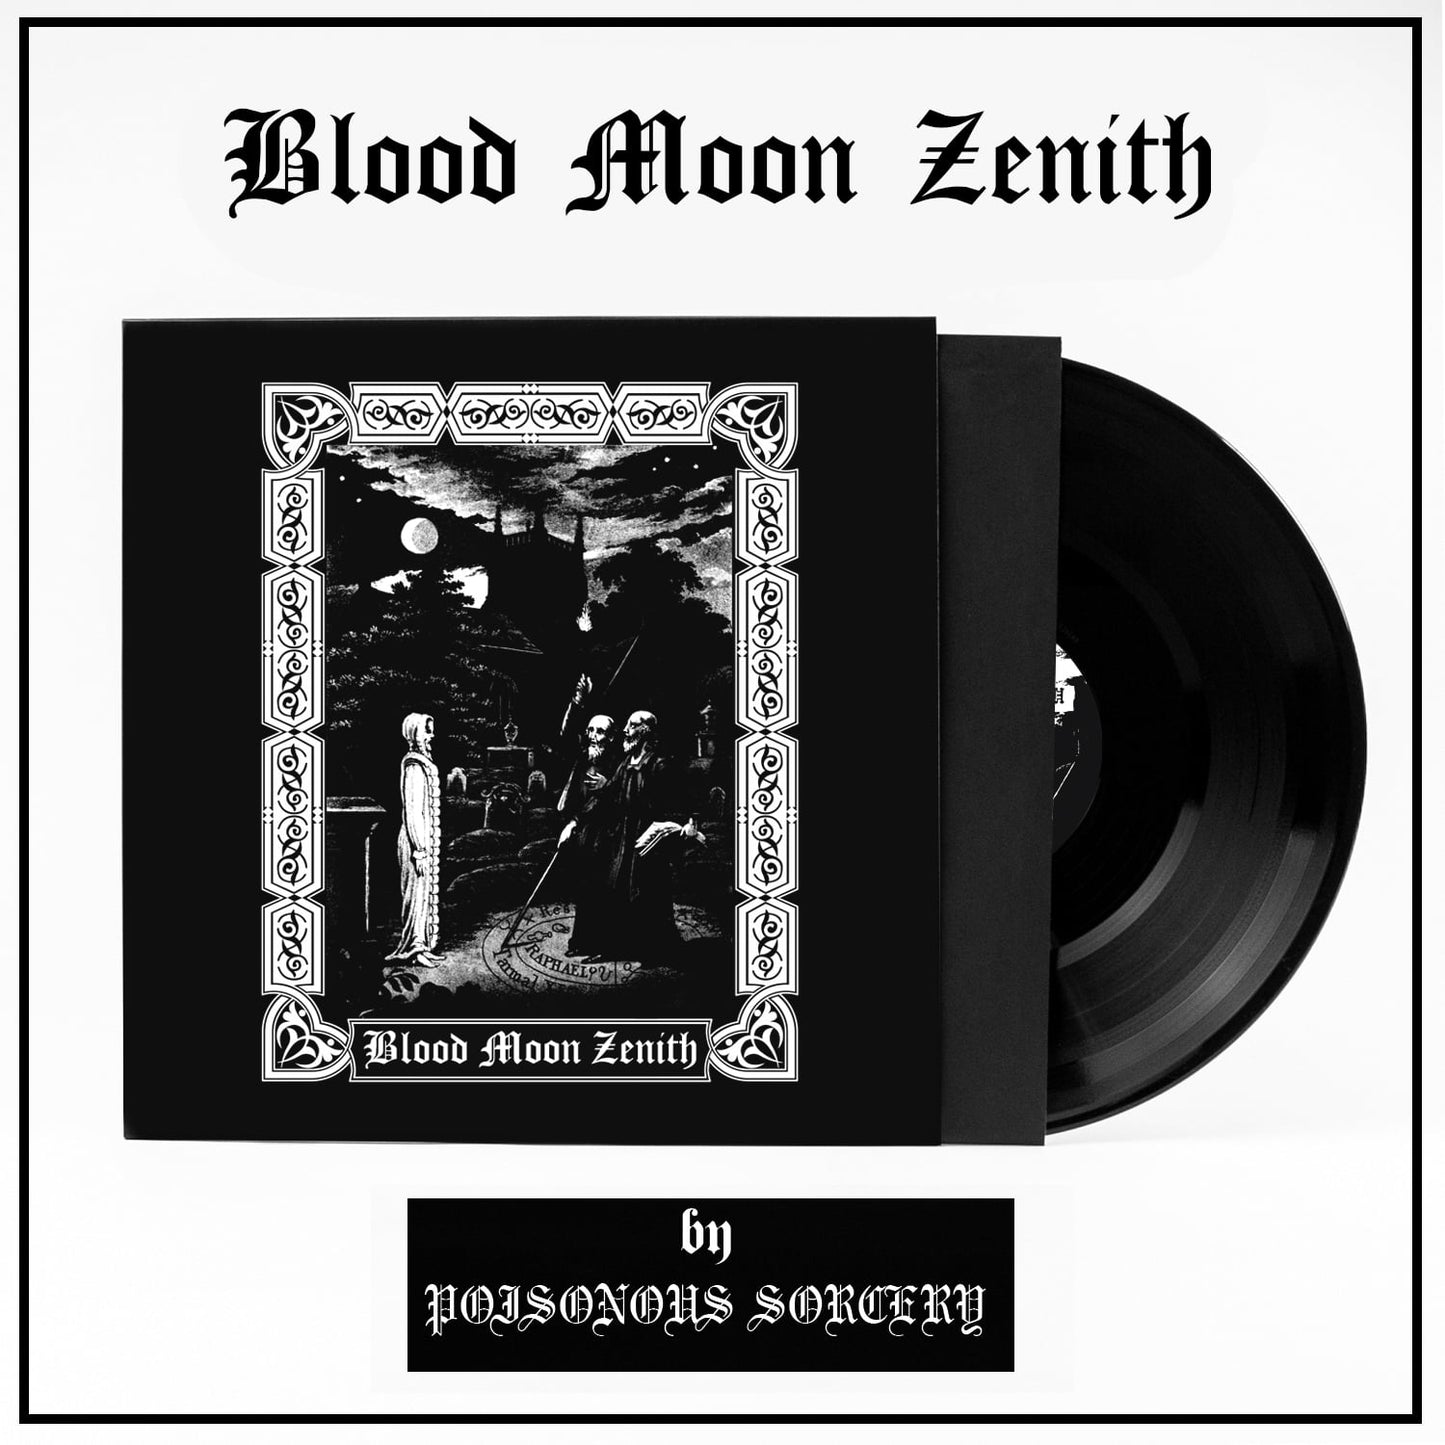 BLOOD MOON ZENITH - Demo LP [SORCERY-006]